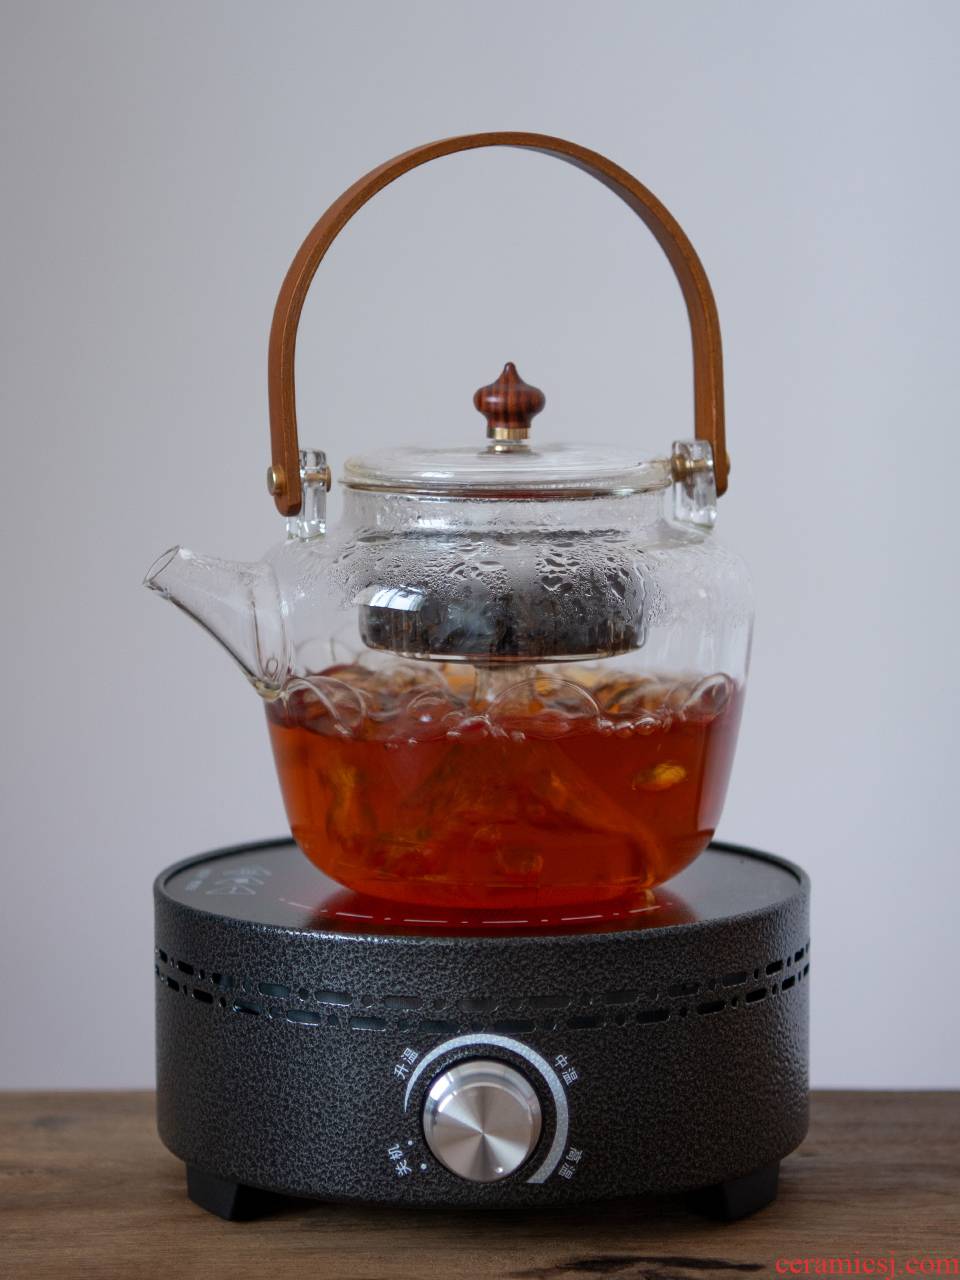 Glass teapot single pot of tea boiling kettle electric TaoLu tea stove of the filter of high - temperature steaming tea stove pot to boil tea